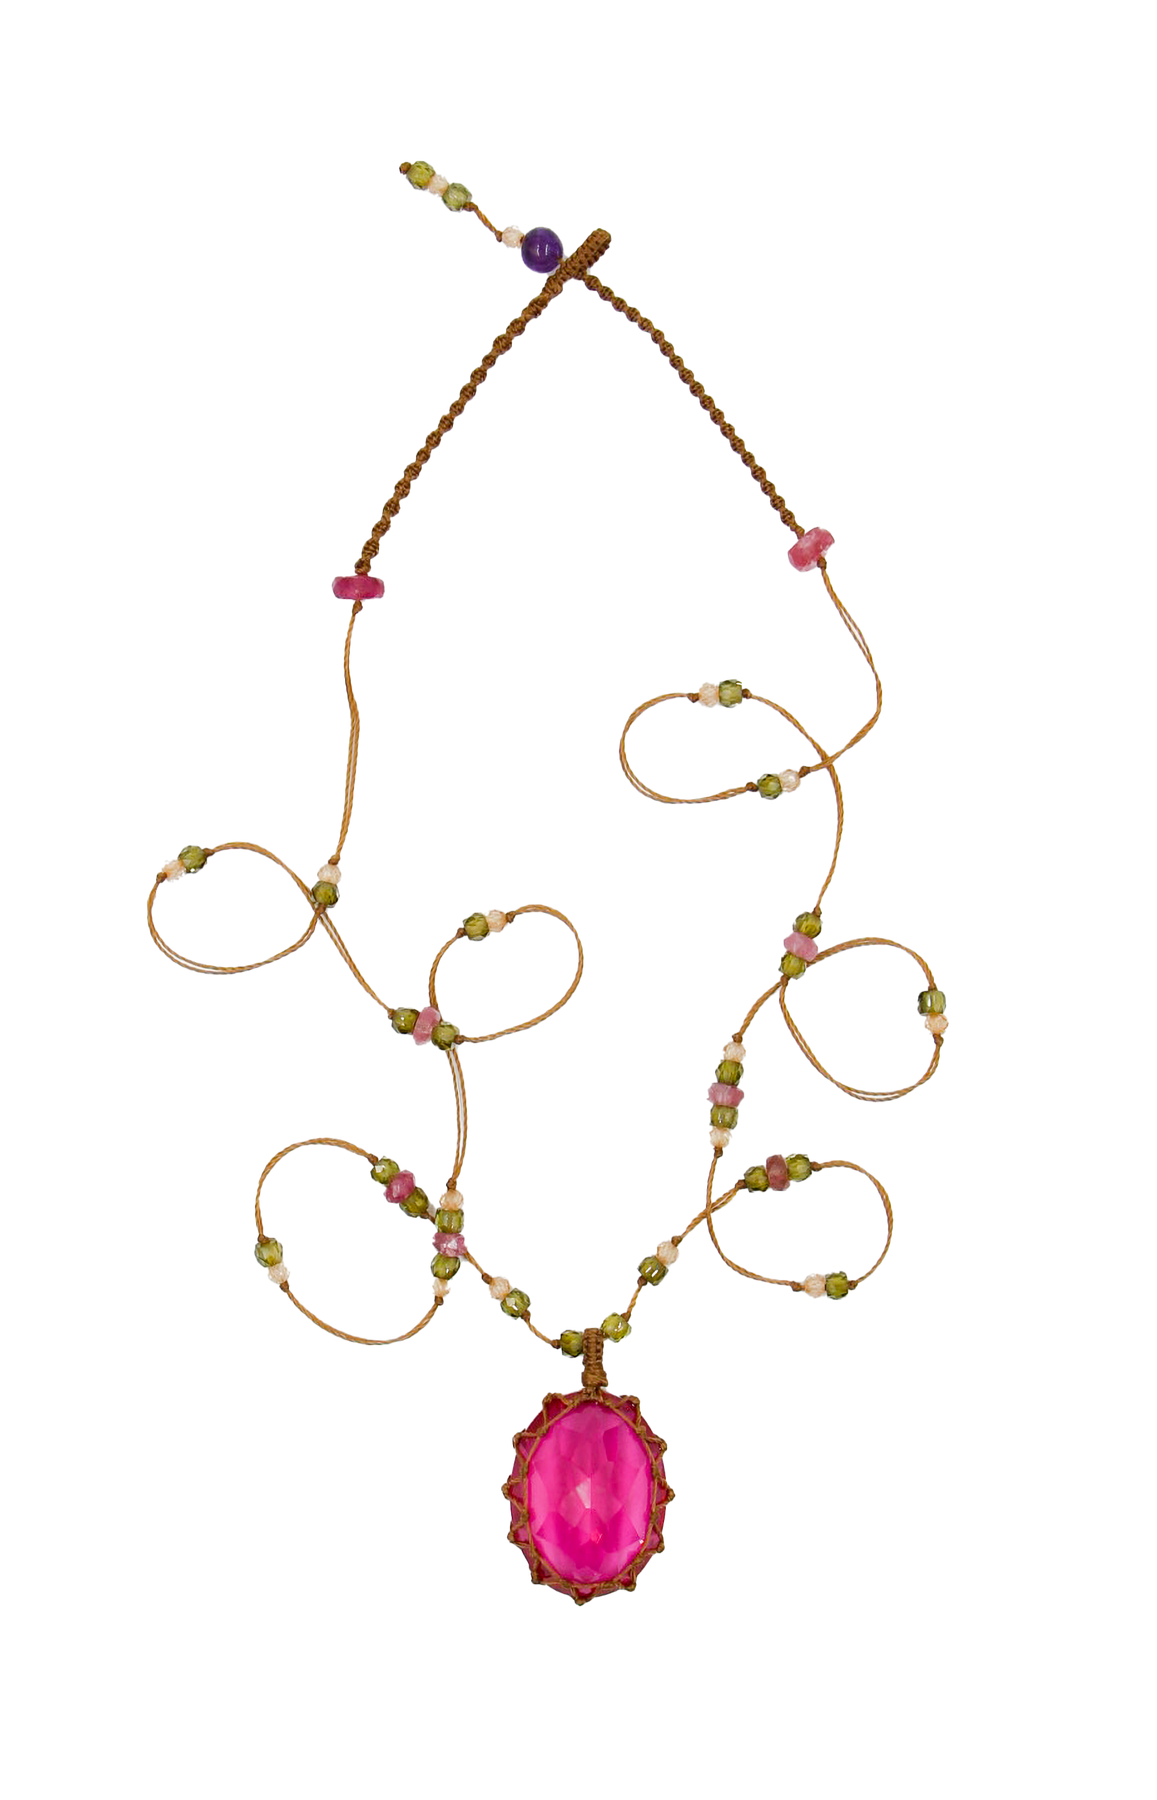 Short Tibetan Necklace - Indian Glass Rose - Mix Pink Tourmaline - Tobacco Thread